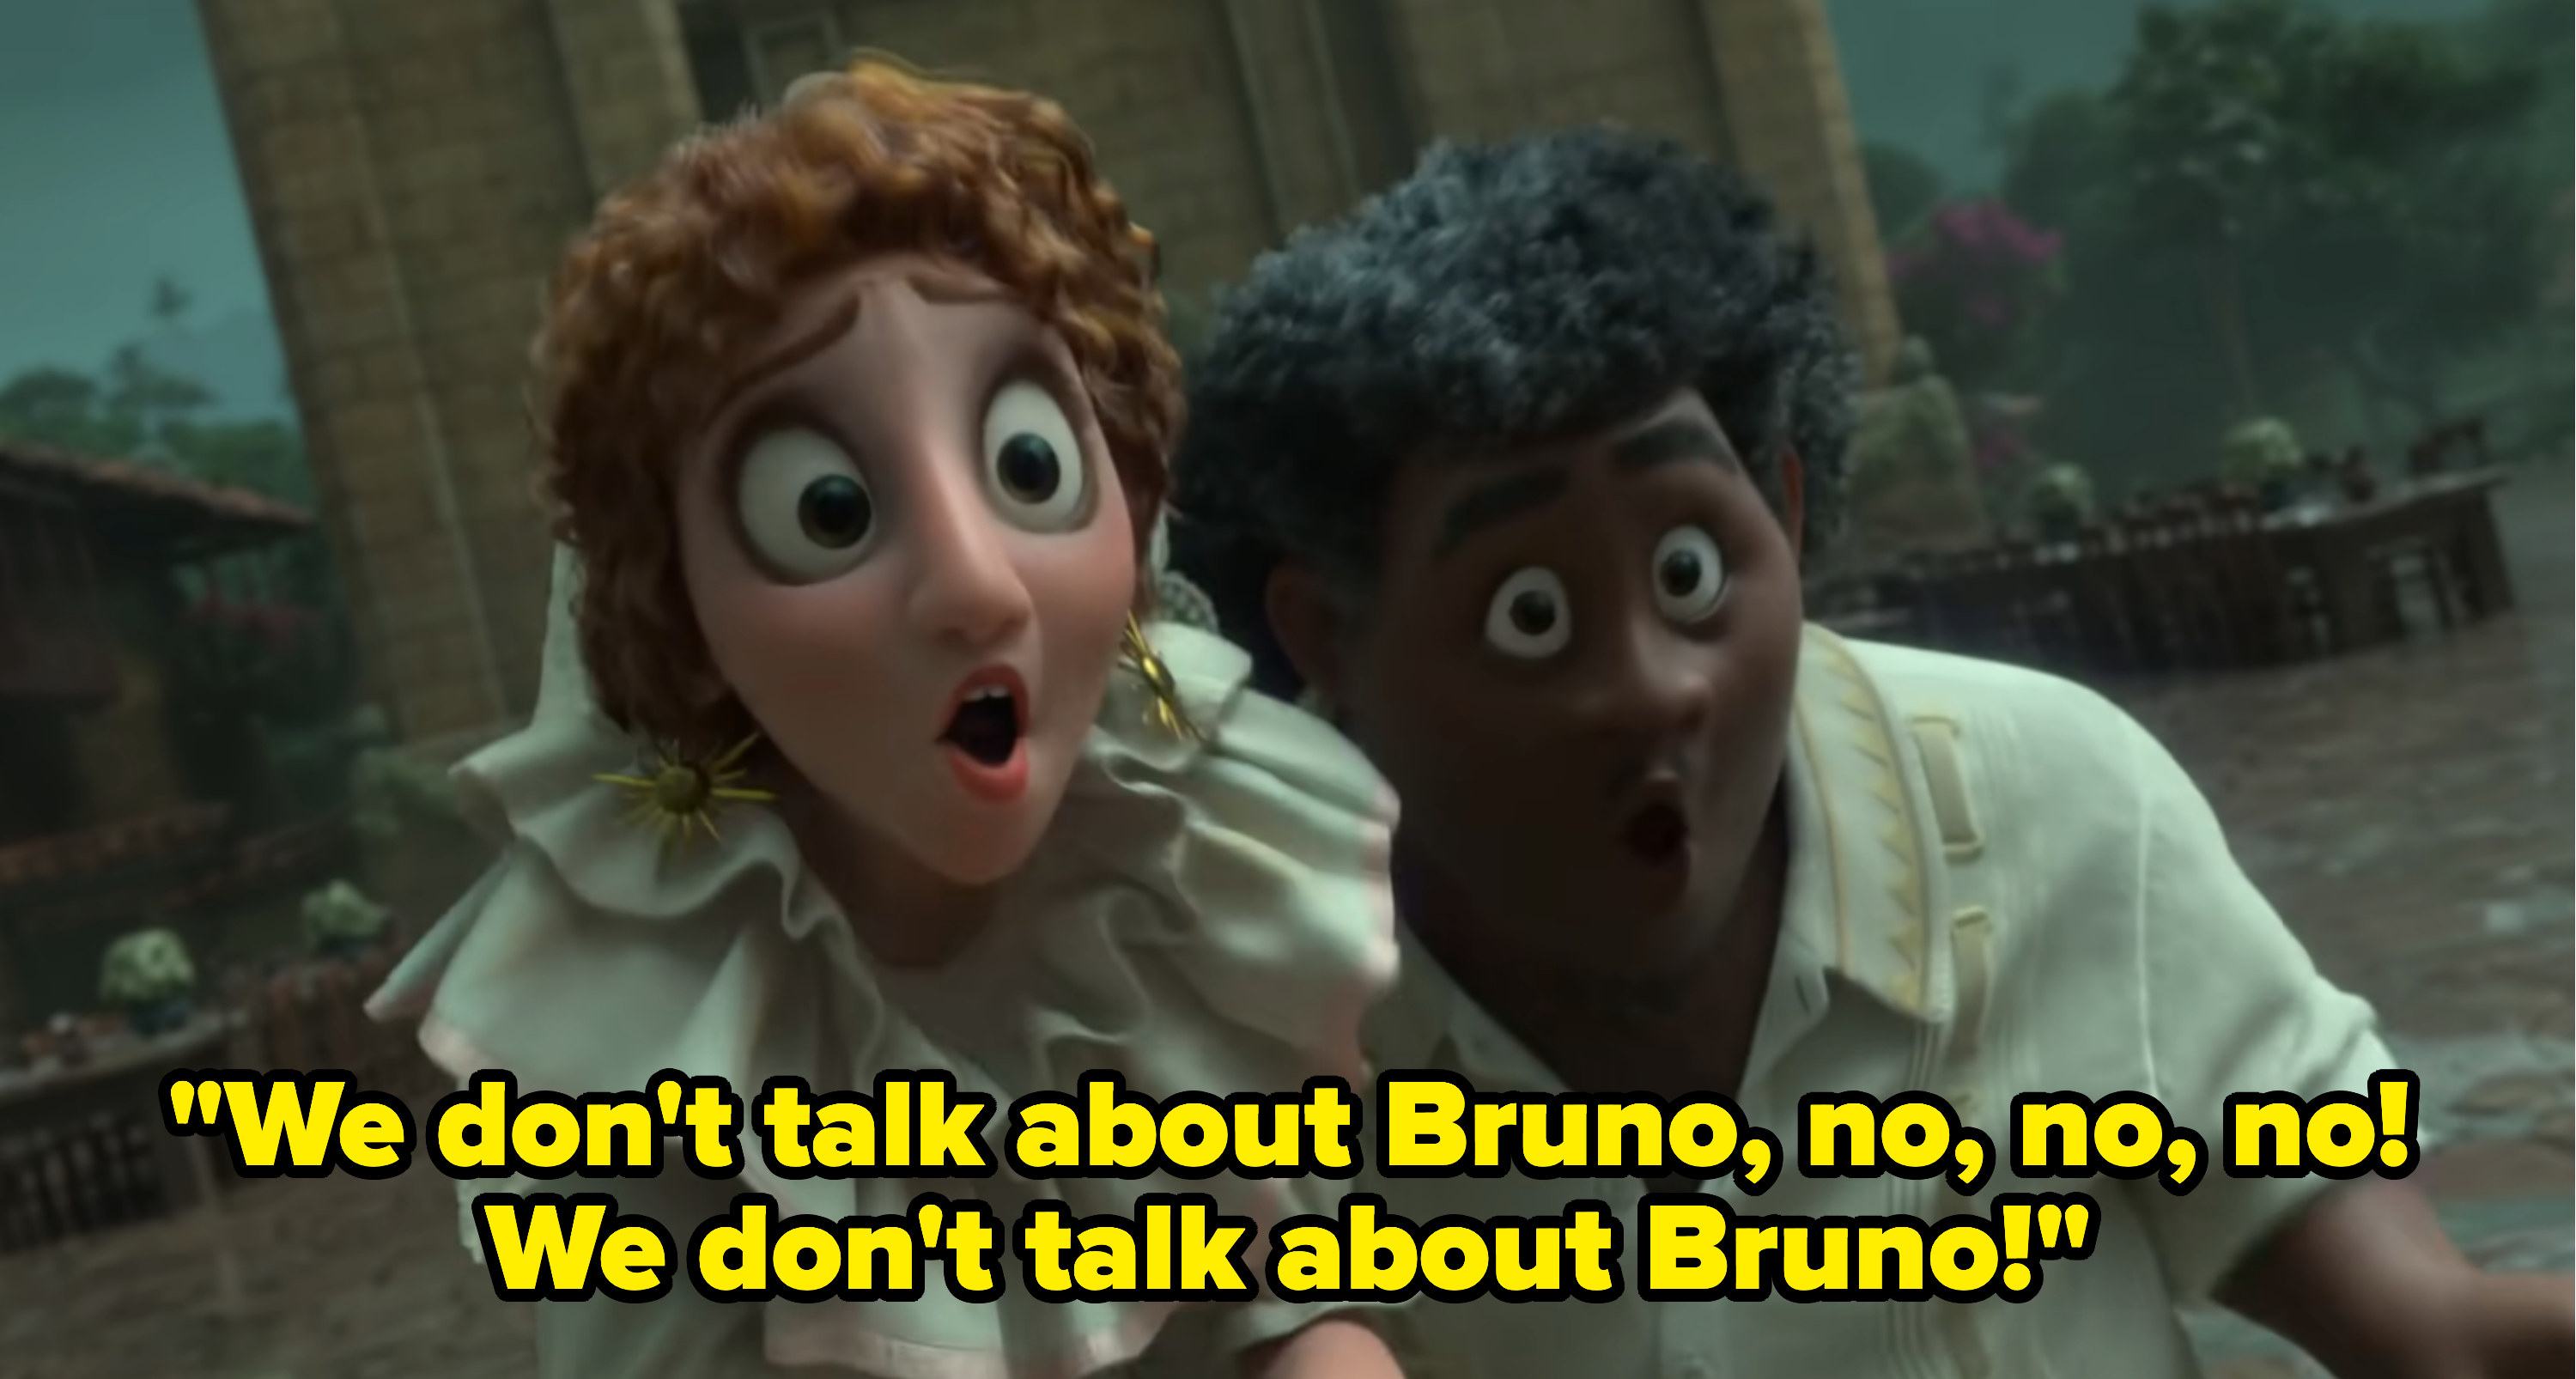 &quot;We don&#x27;t talk about Bruno, no no no!&quot;